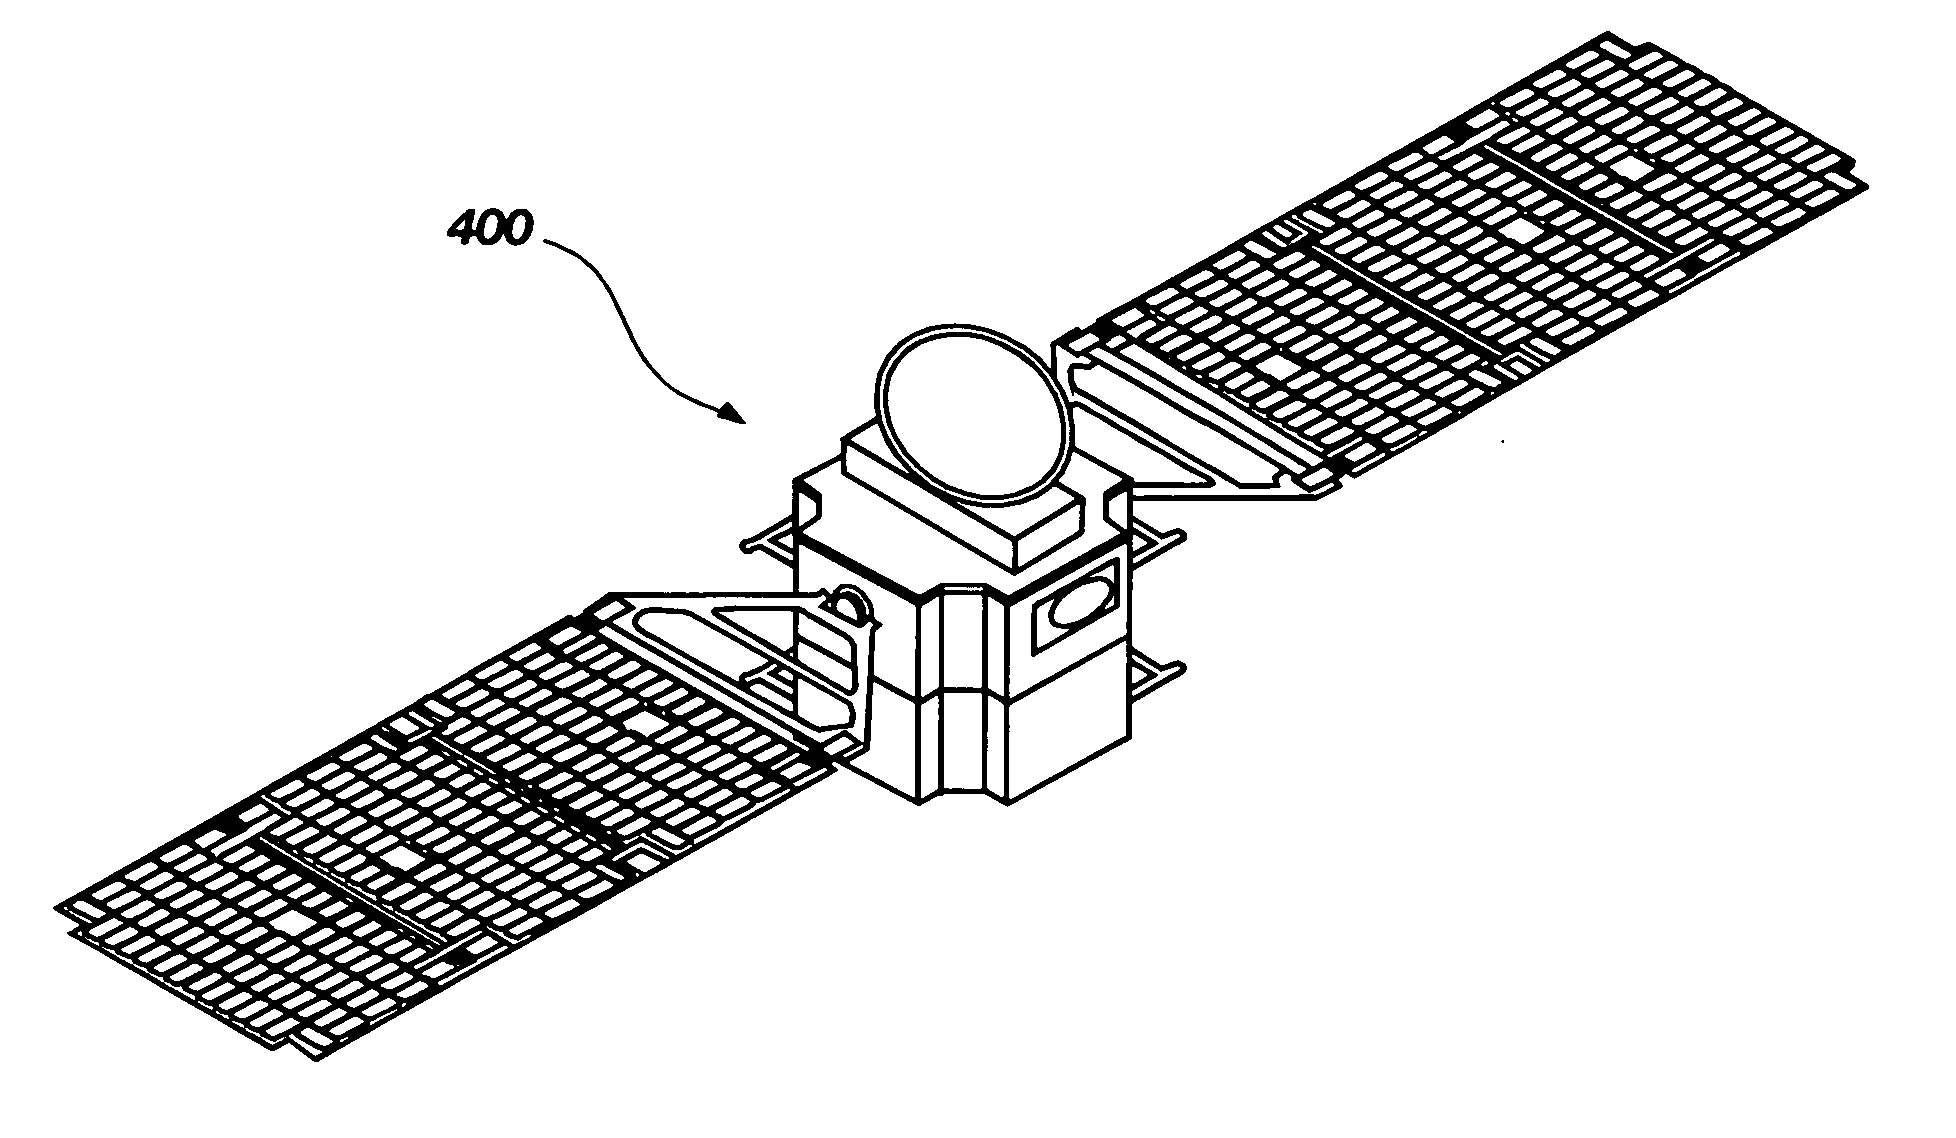 Modular platform architecture for satellites